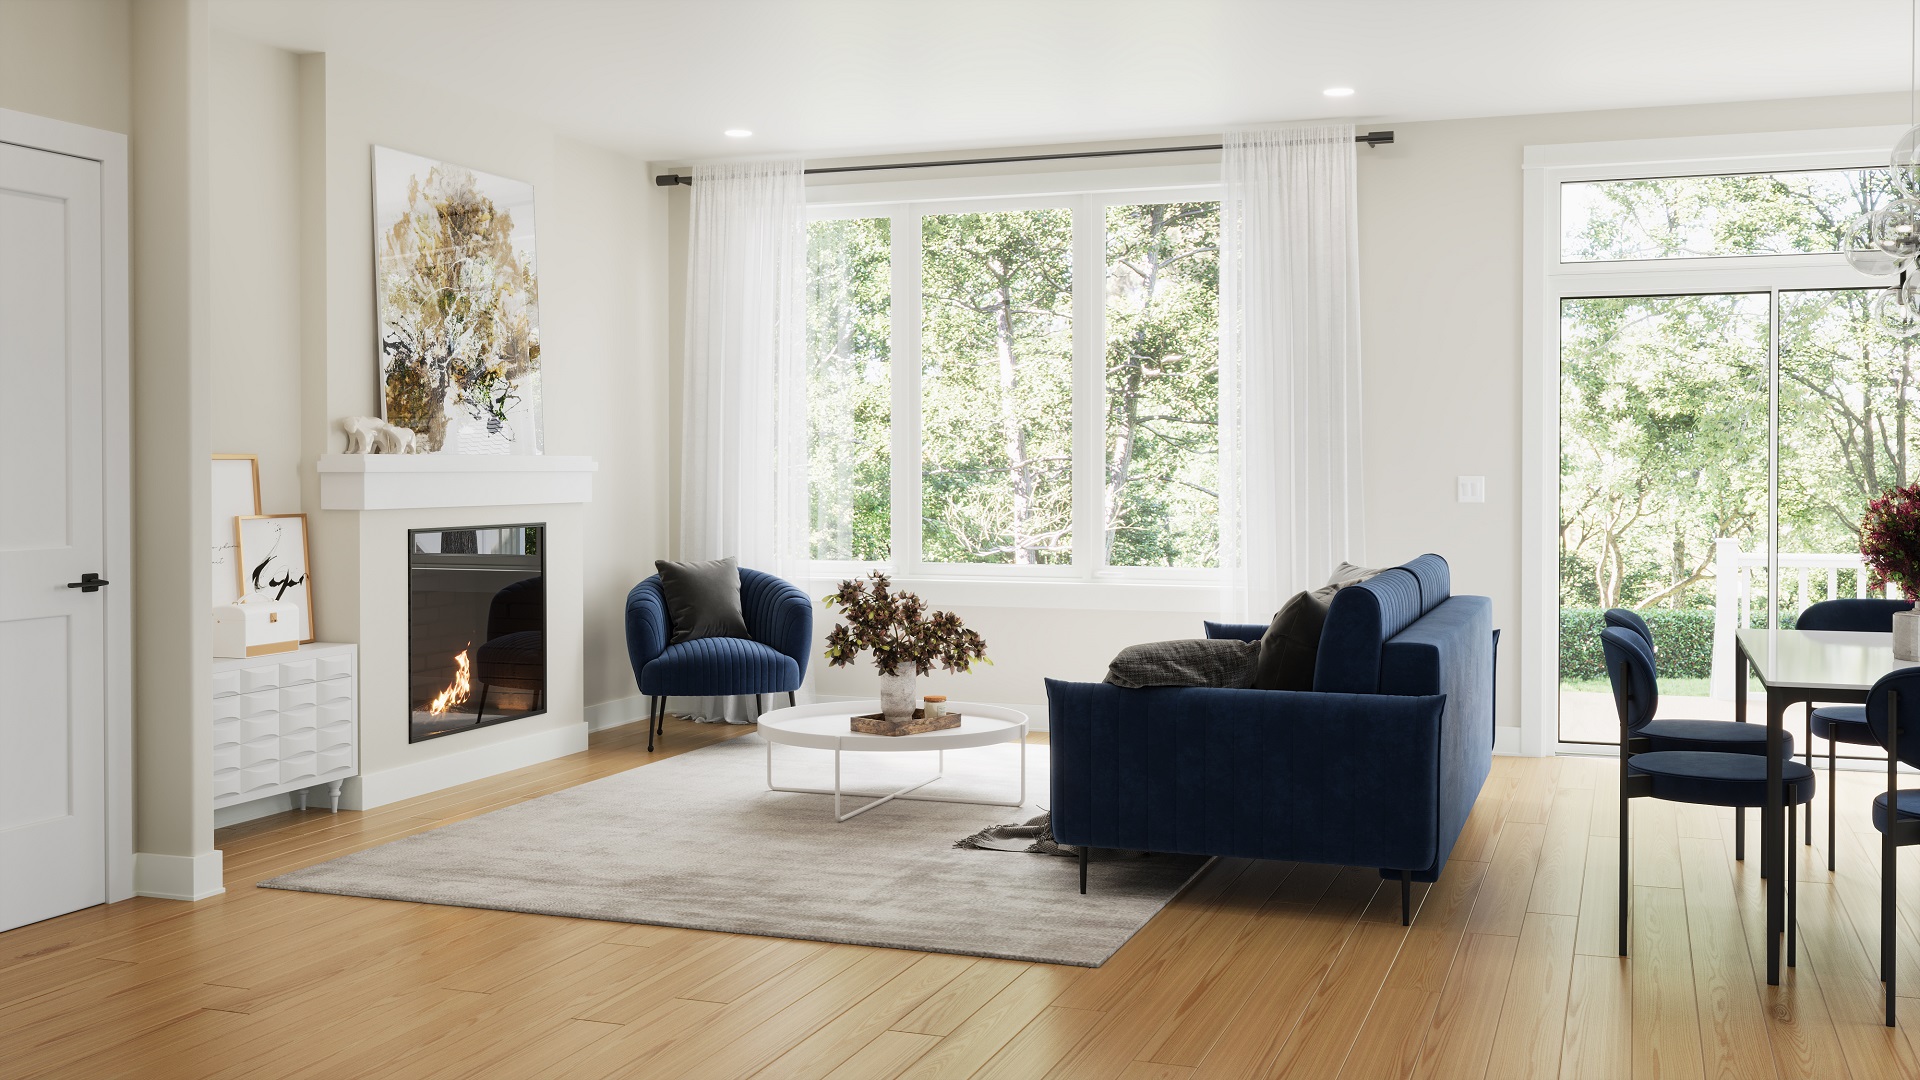 Energy-efficient Homes 3D Rendering: Living Room Interior